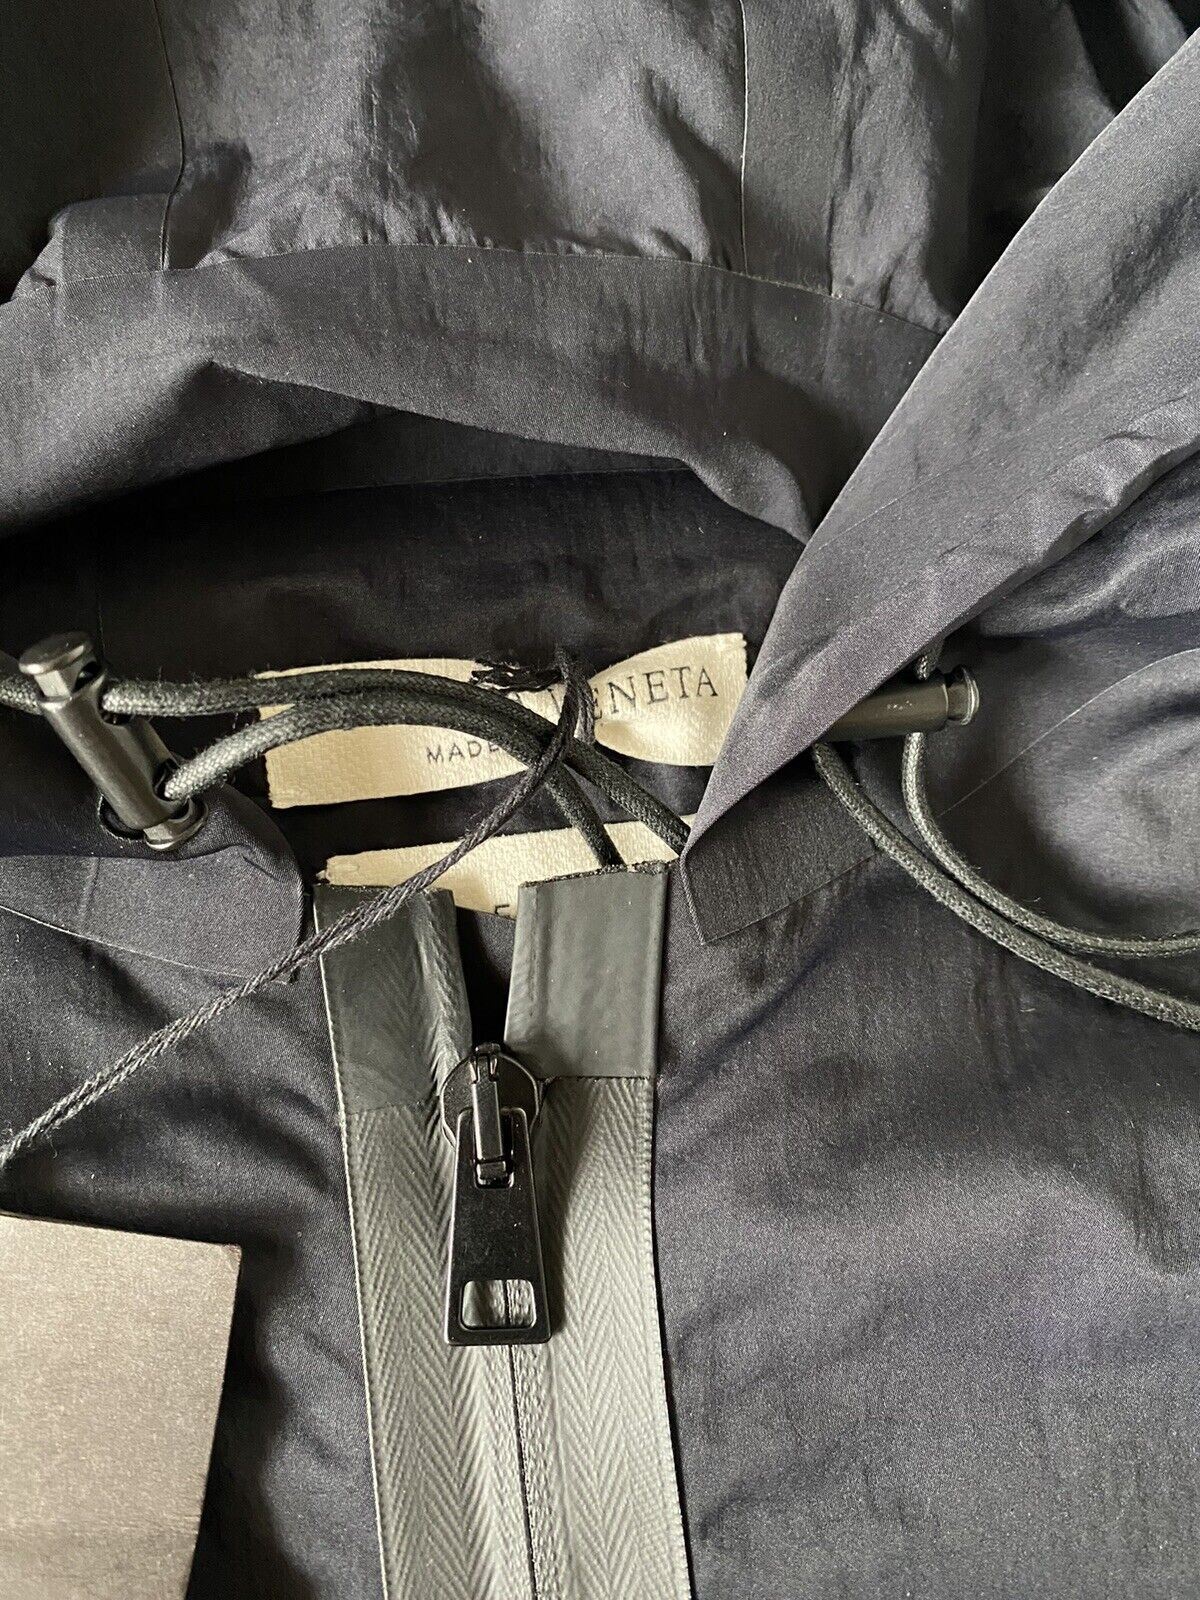 NWT $1850 Bottega Veneta Men's Blouson Tech Nylon Black Jacket with Hoodie 40 US